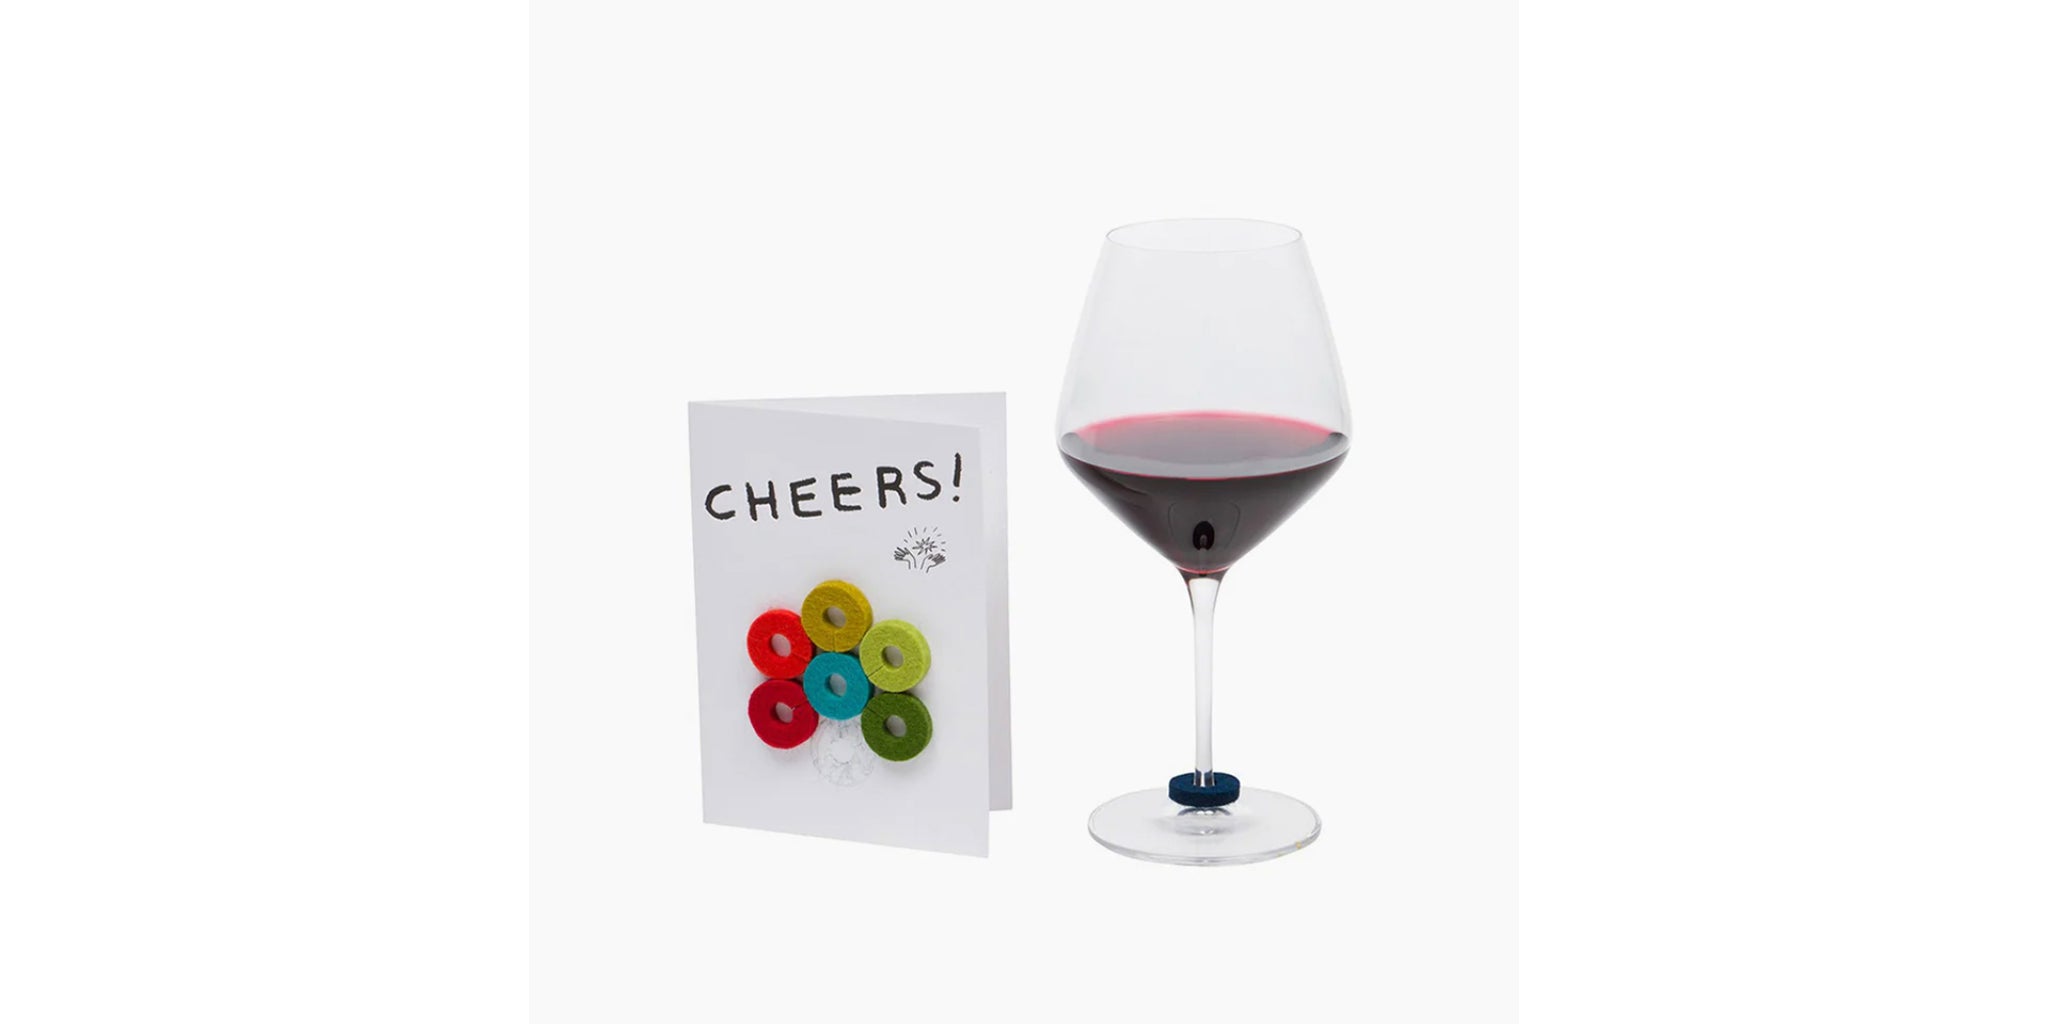 Wine-Ote's Merino Wool Felt Wine Markers with Card